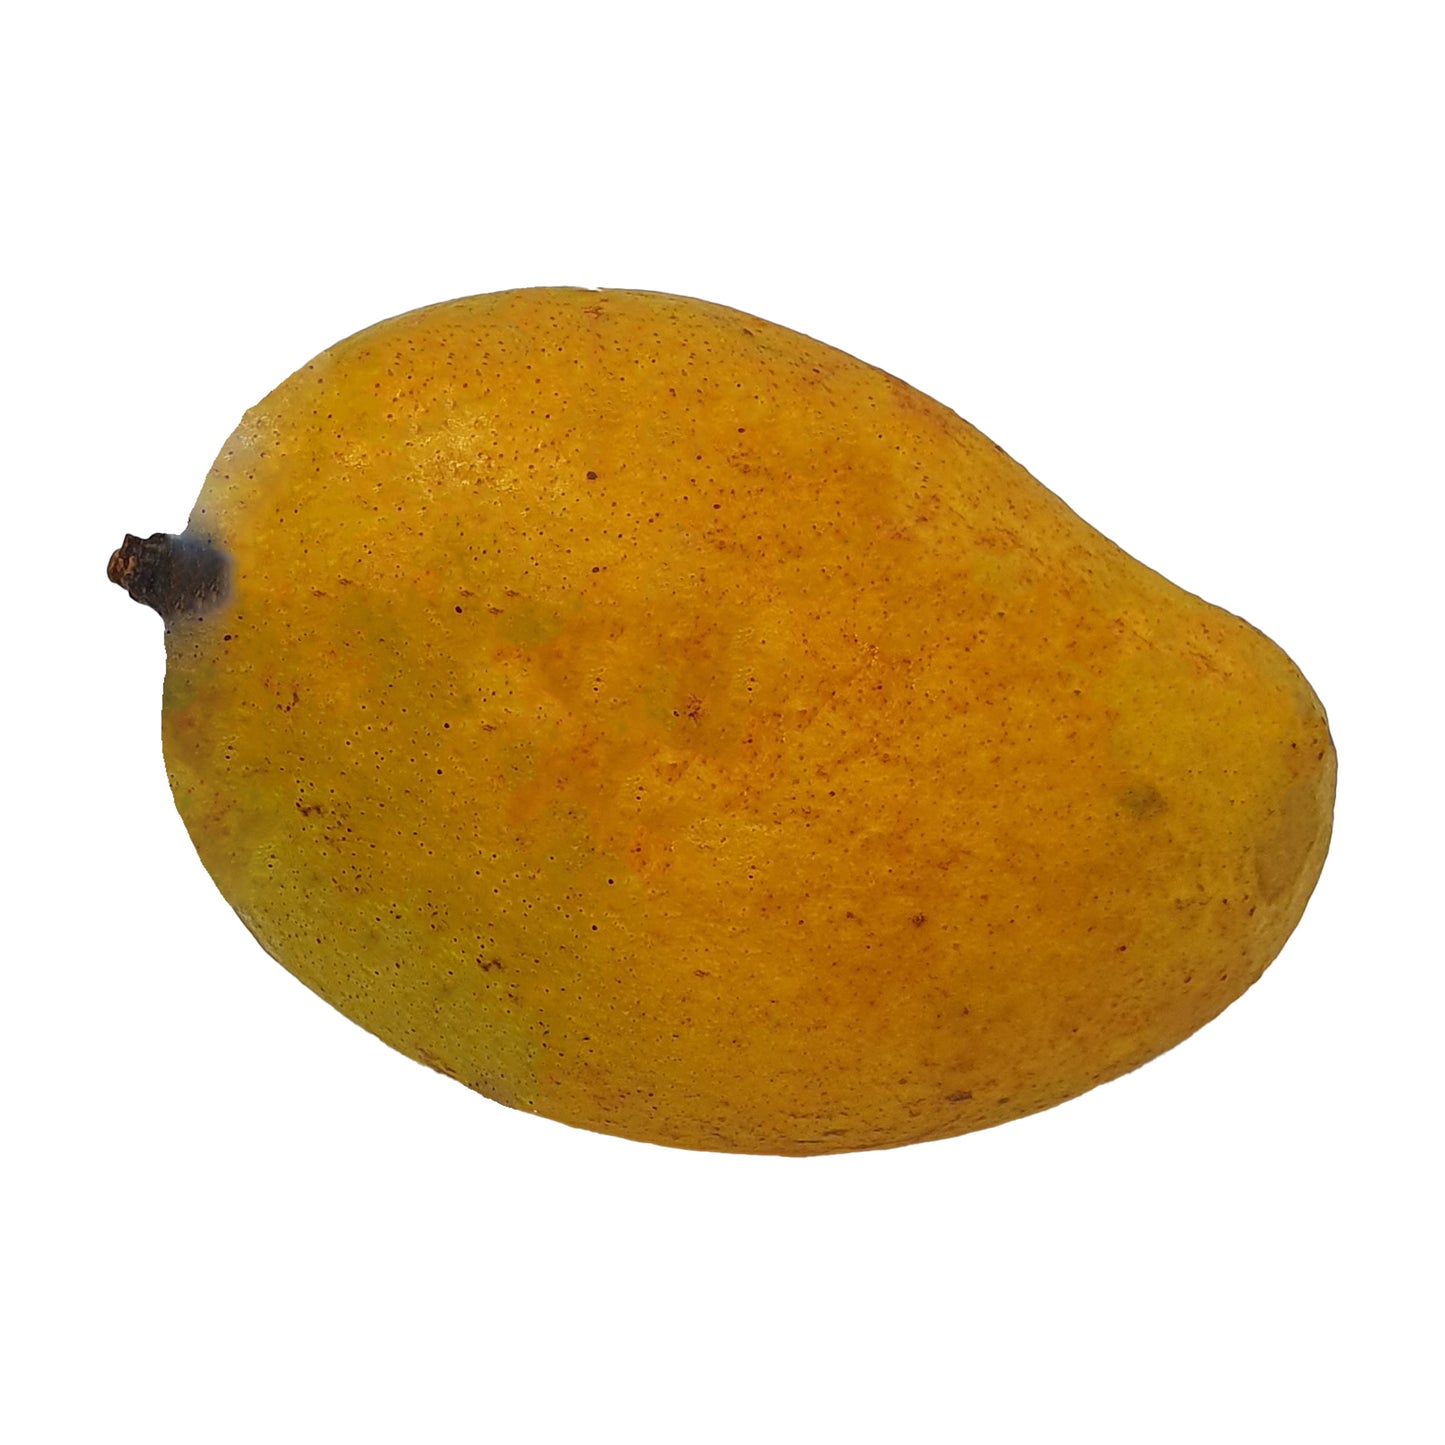 Alphonso Mango (1 kg)